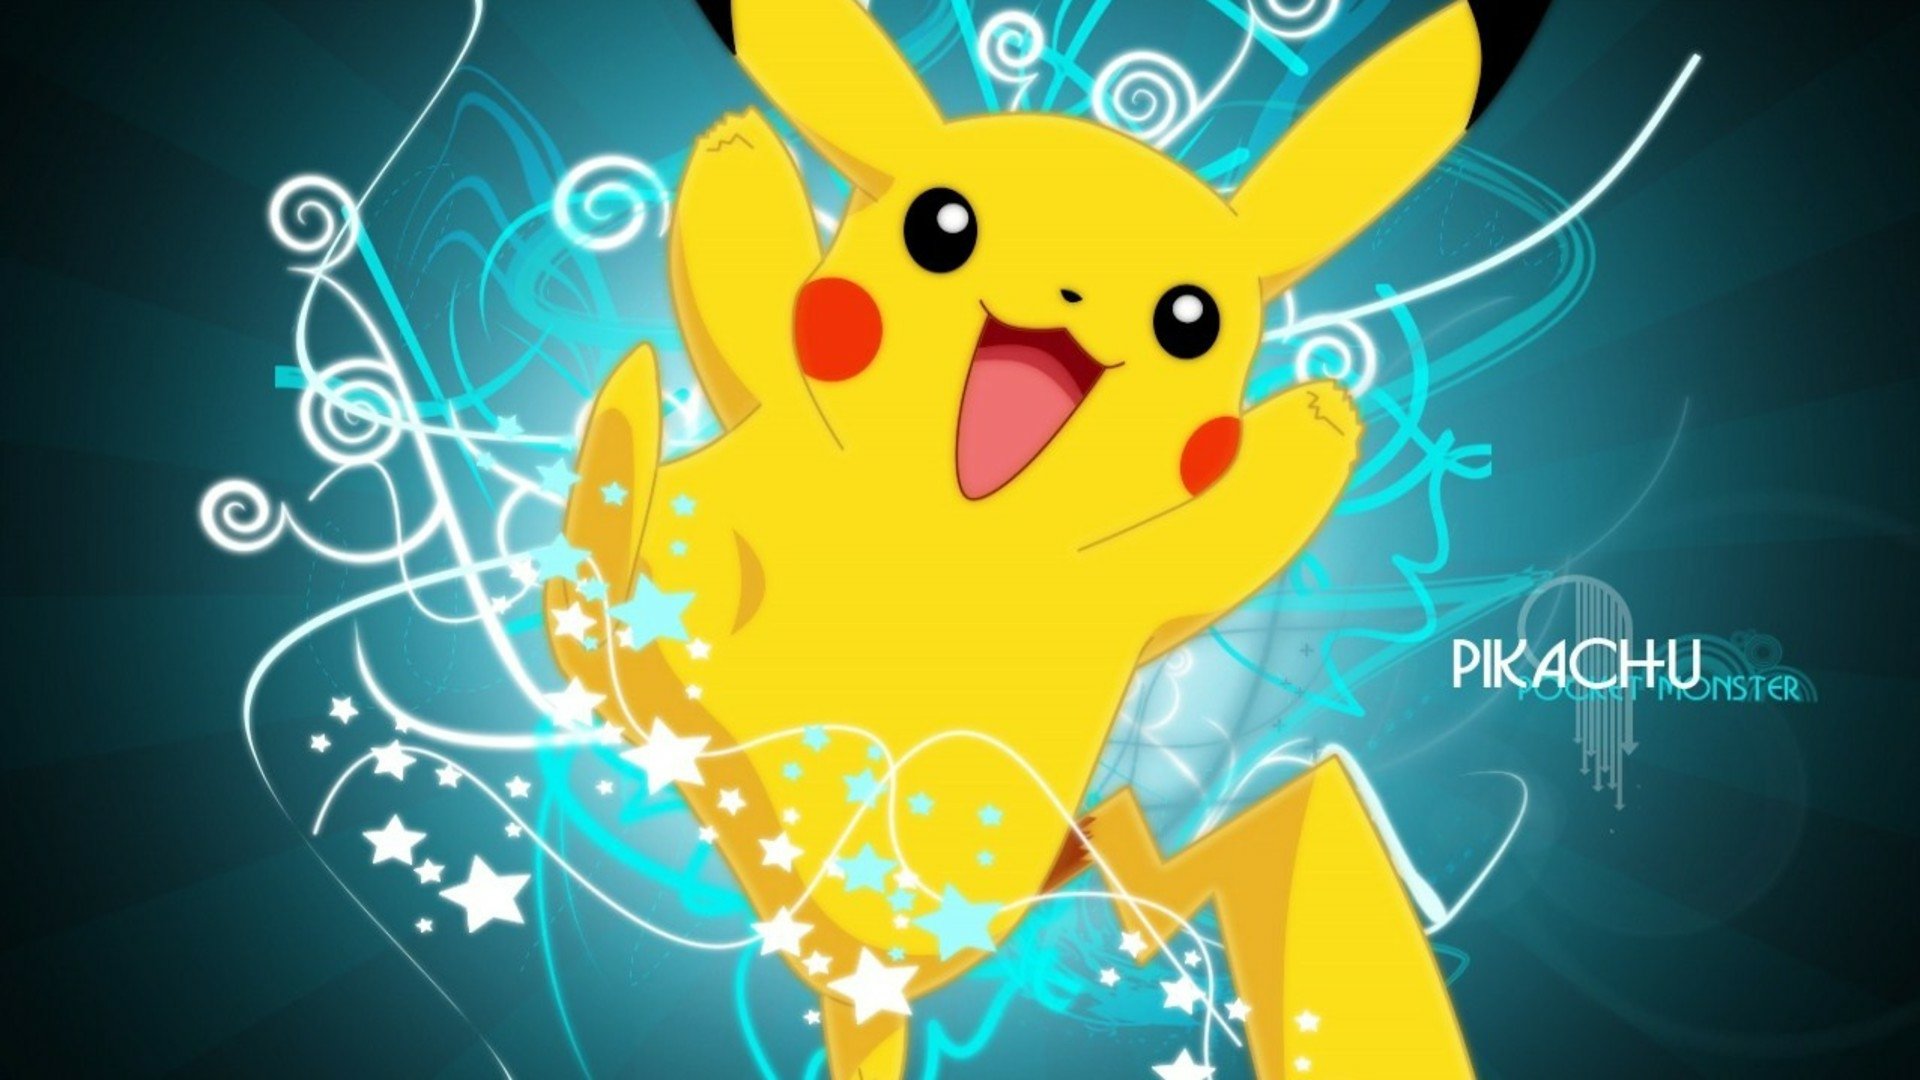 Pokémon Yellow Special Pikachu Edition Full HD Fond d écran and Arrière Plan x ID